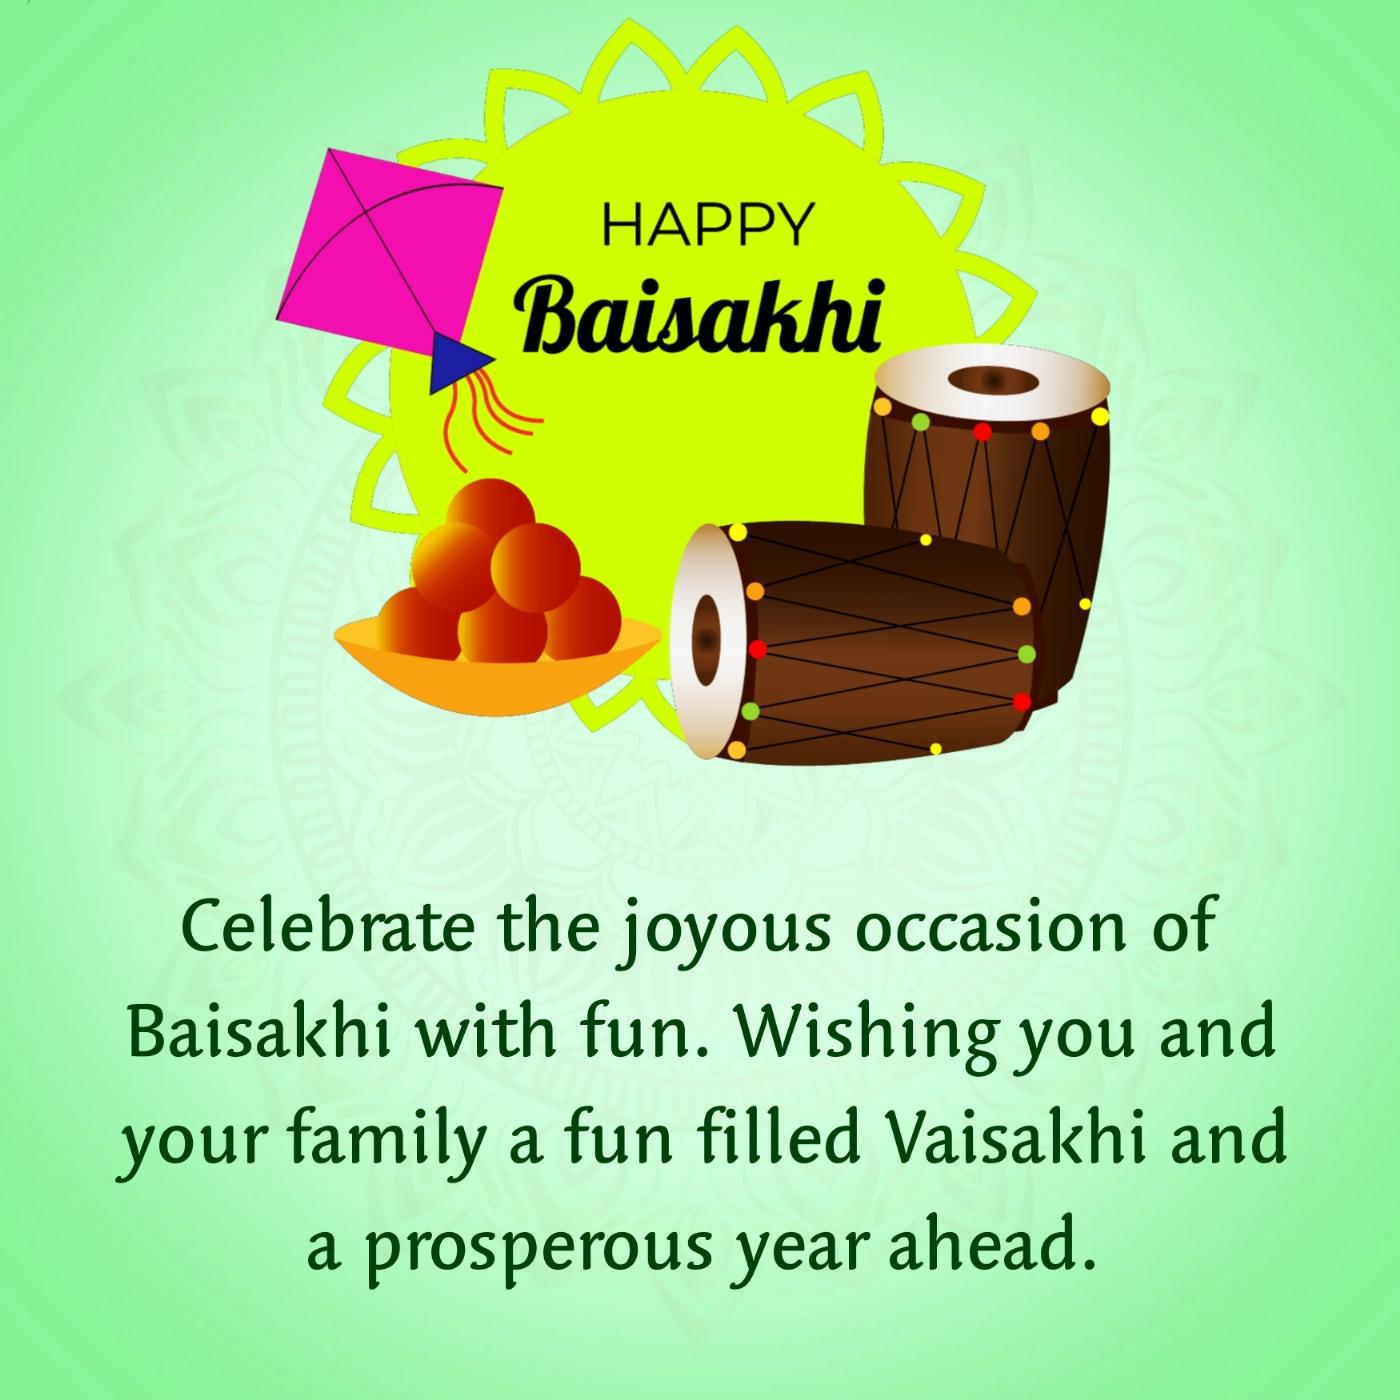 Celebrate the joyous occasion of Baisakhi with fun